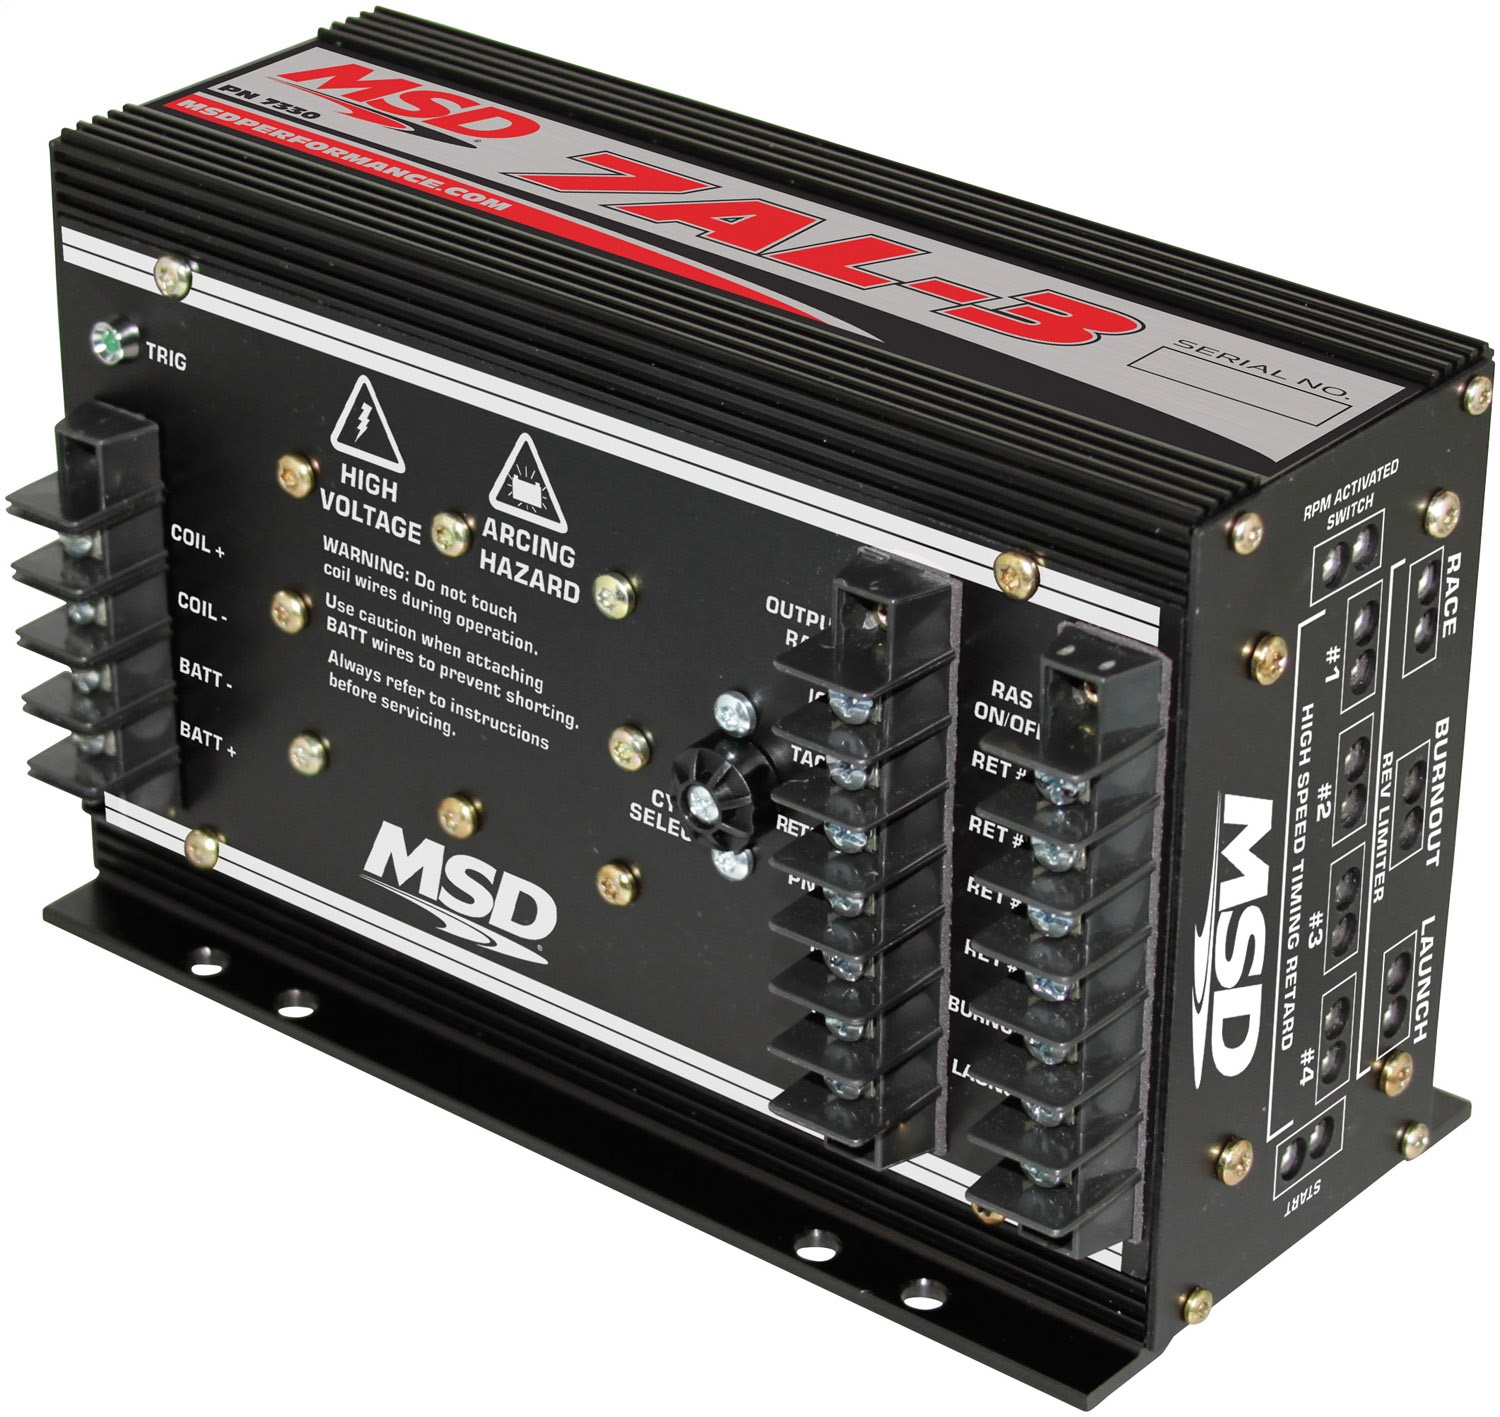 MSD 7AL-3 Pro Drag Race Ignition Box Black - 7330